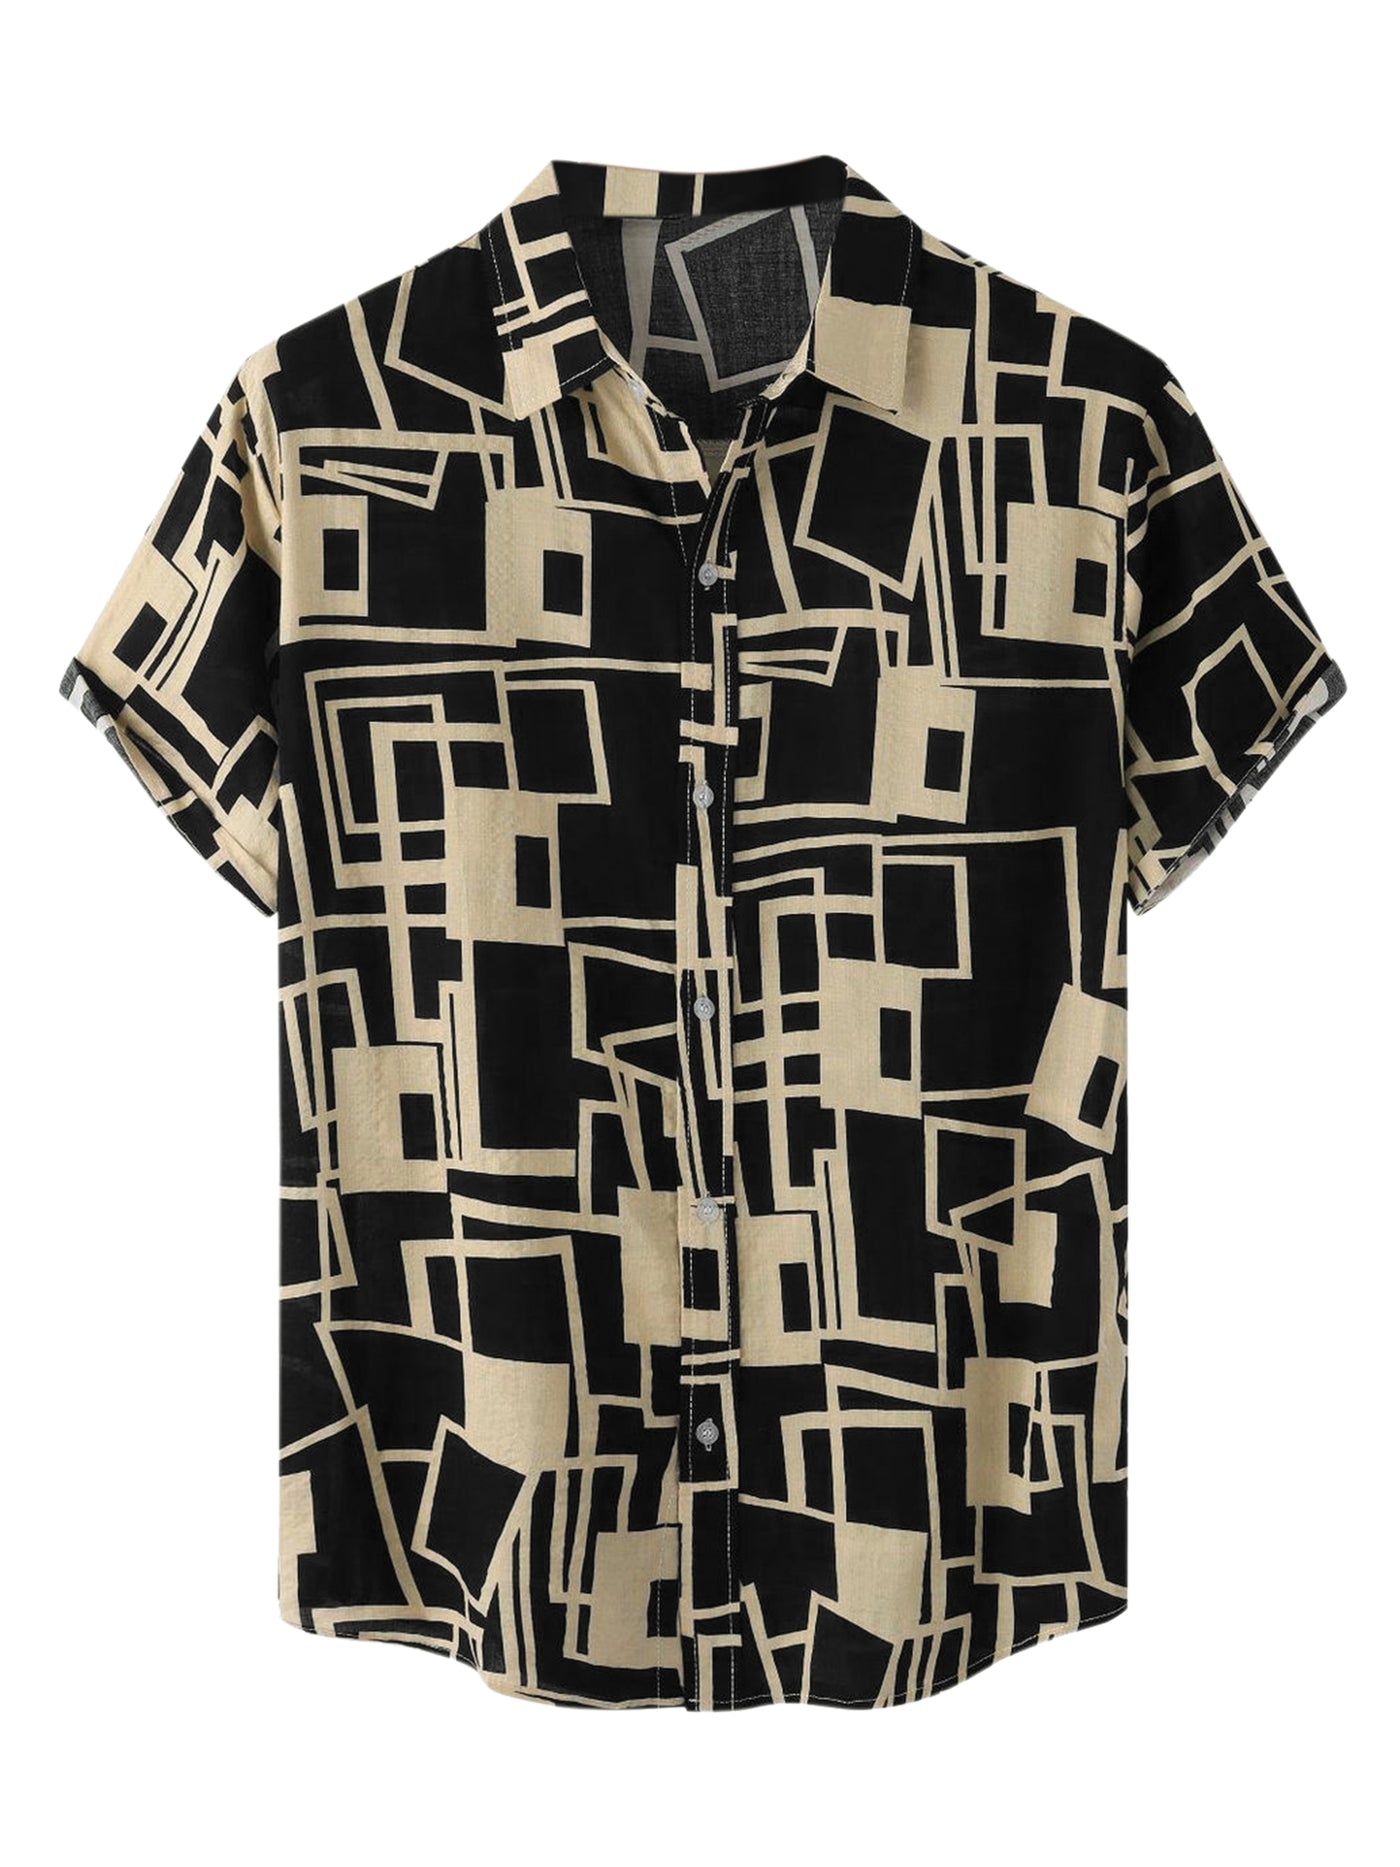 Bublédon Geometric Shirt Button Up Short Sleeves Casual Summer Shirts